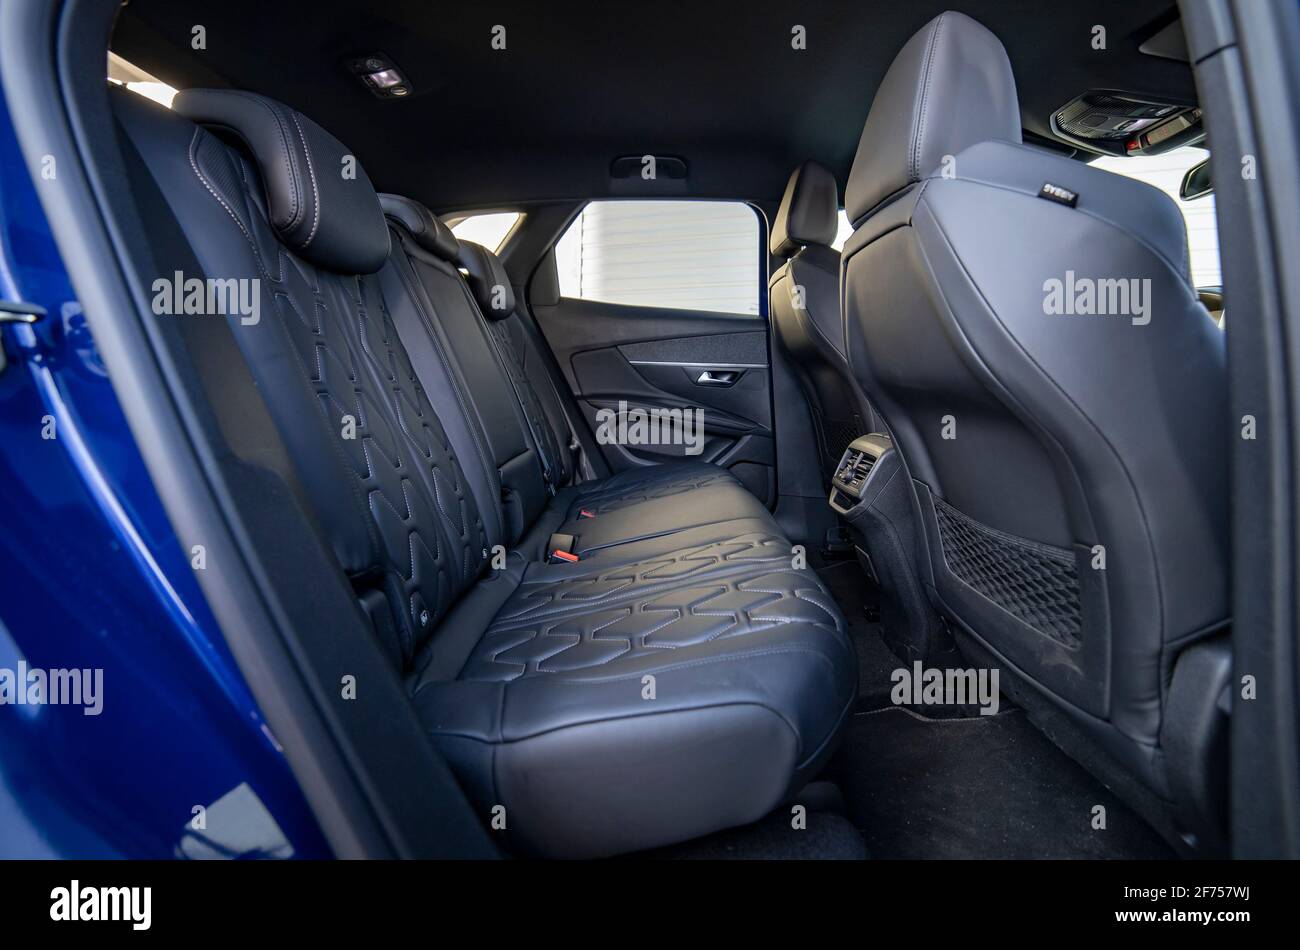 Row of passenger rear seats upholstered in black interior modern passenger car Stock Photo